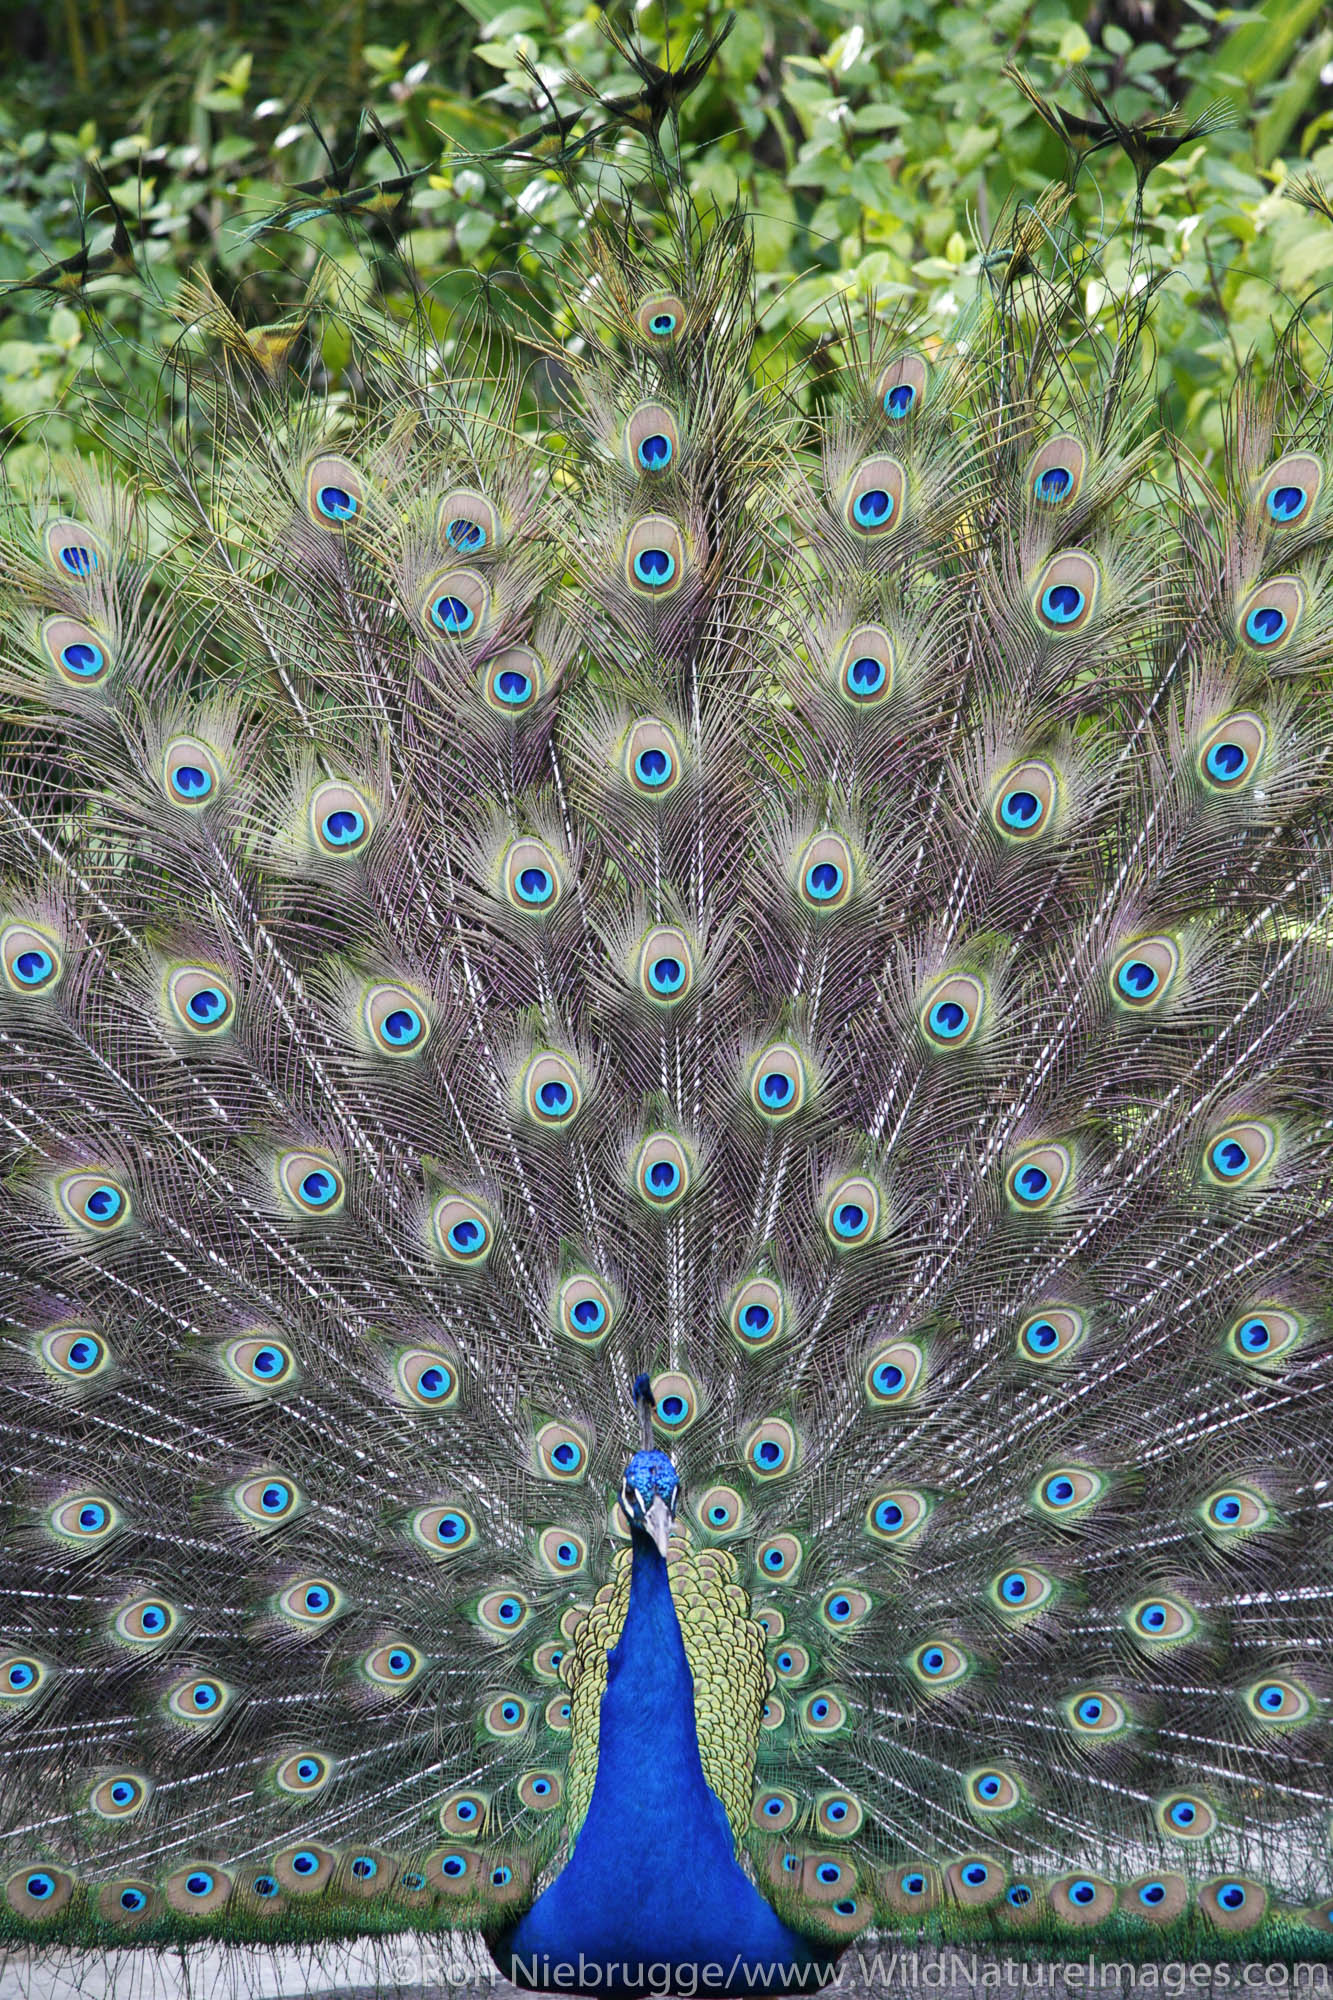 A Peacock at the San Diego Zoo in Balboa Park, San Diego, California.